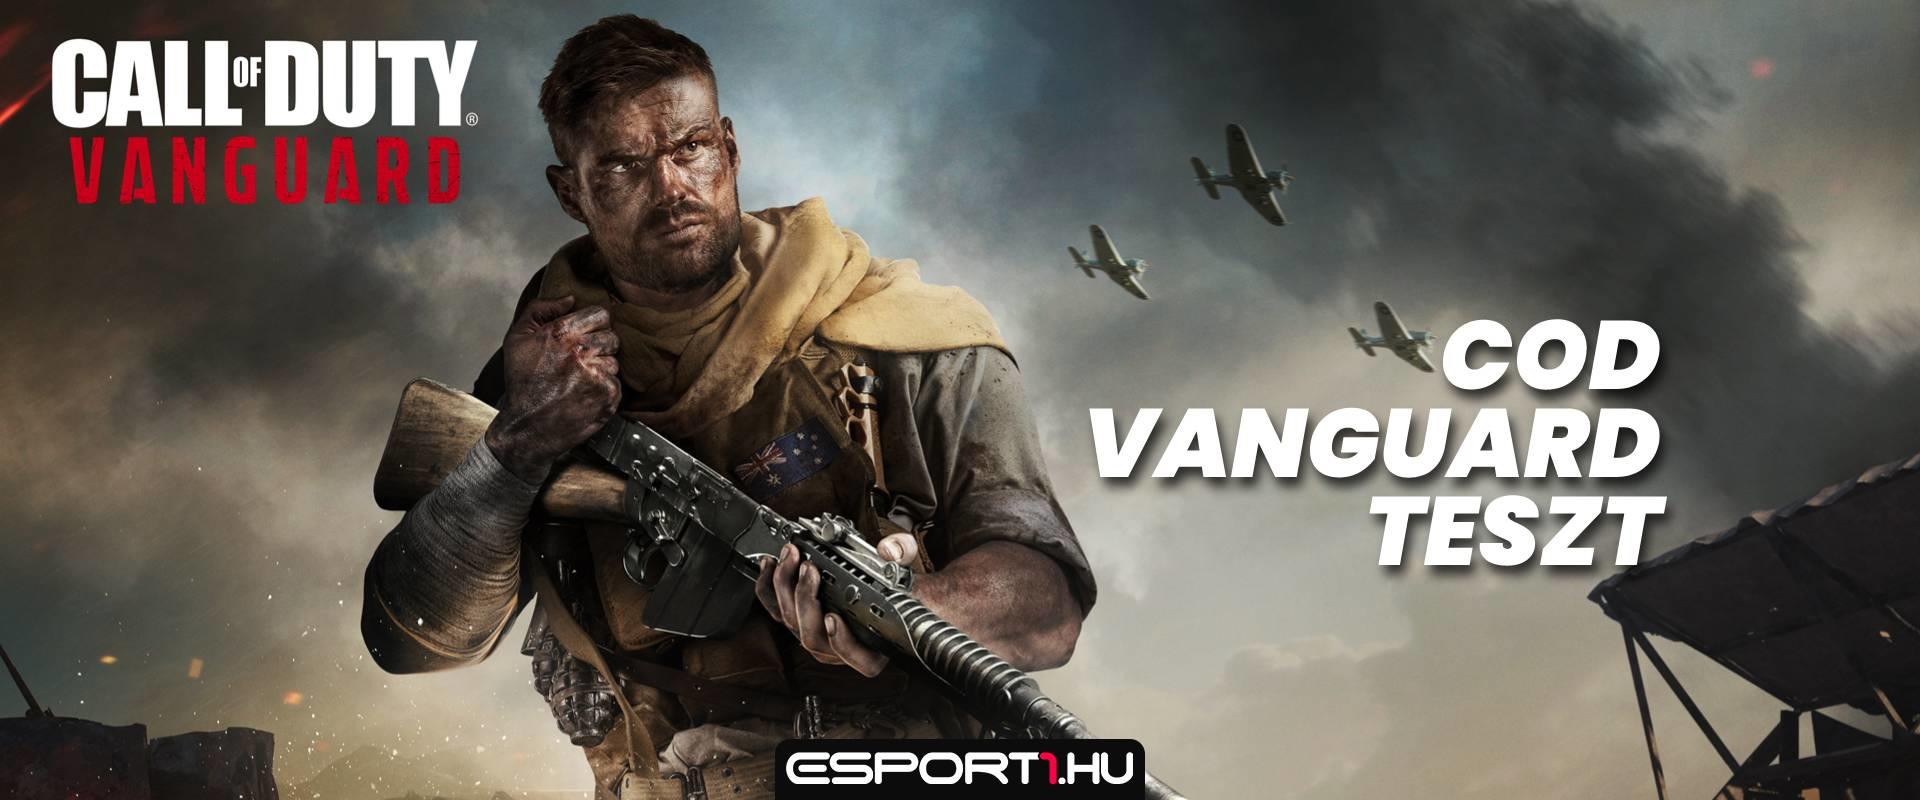 Call of Duty: Vanguard teszt - Bezzeg régen